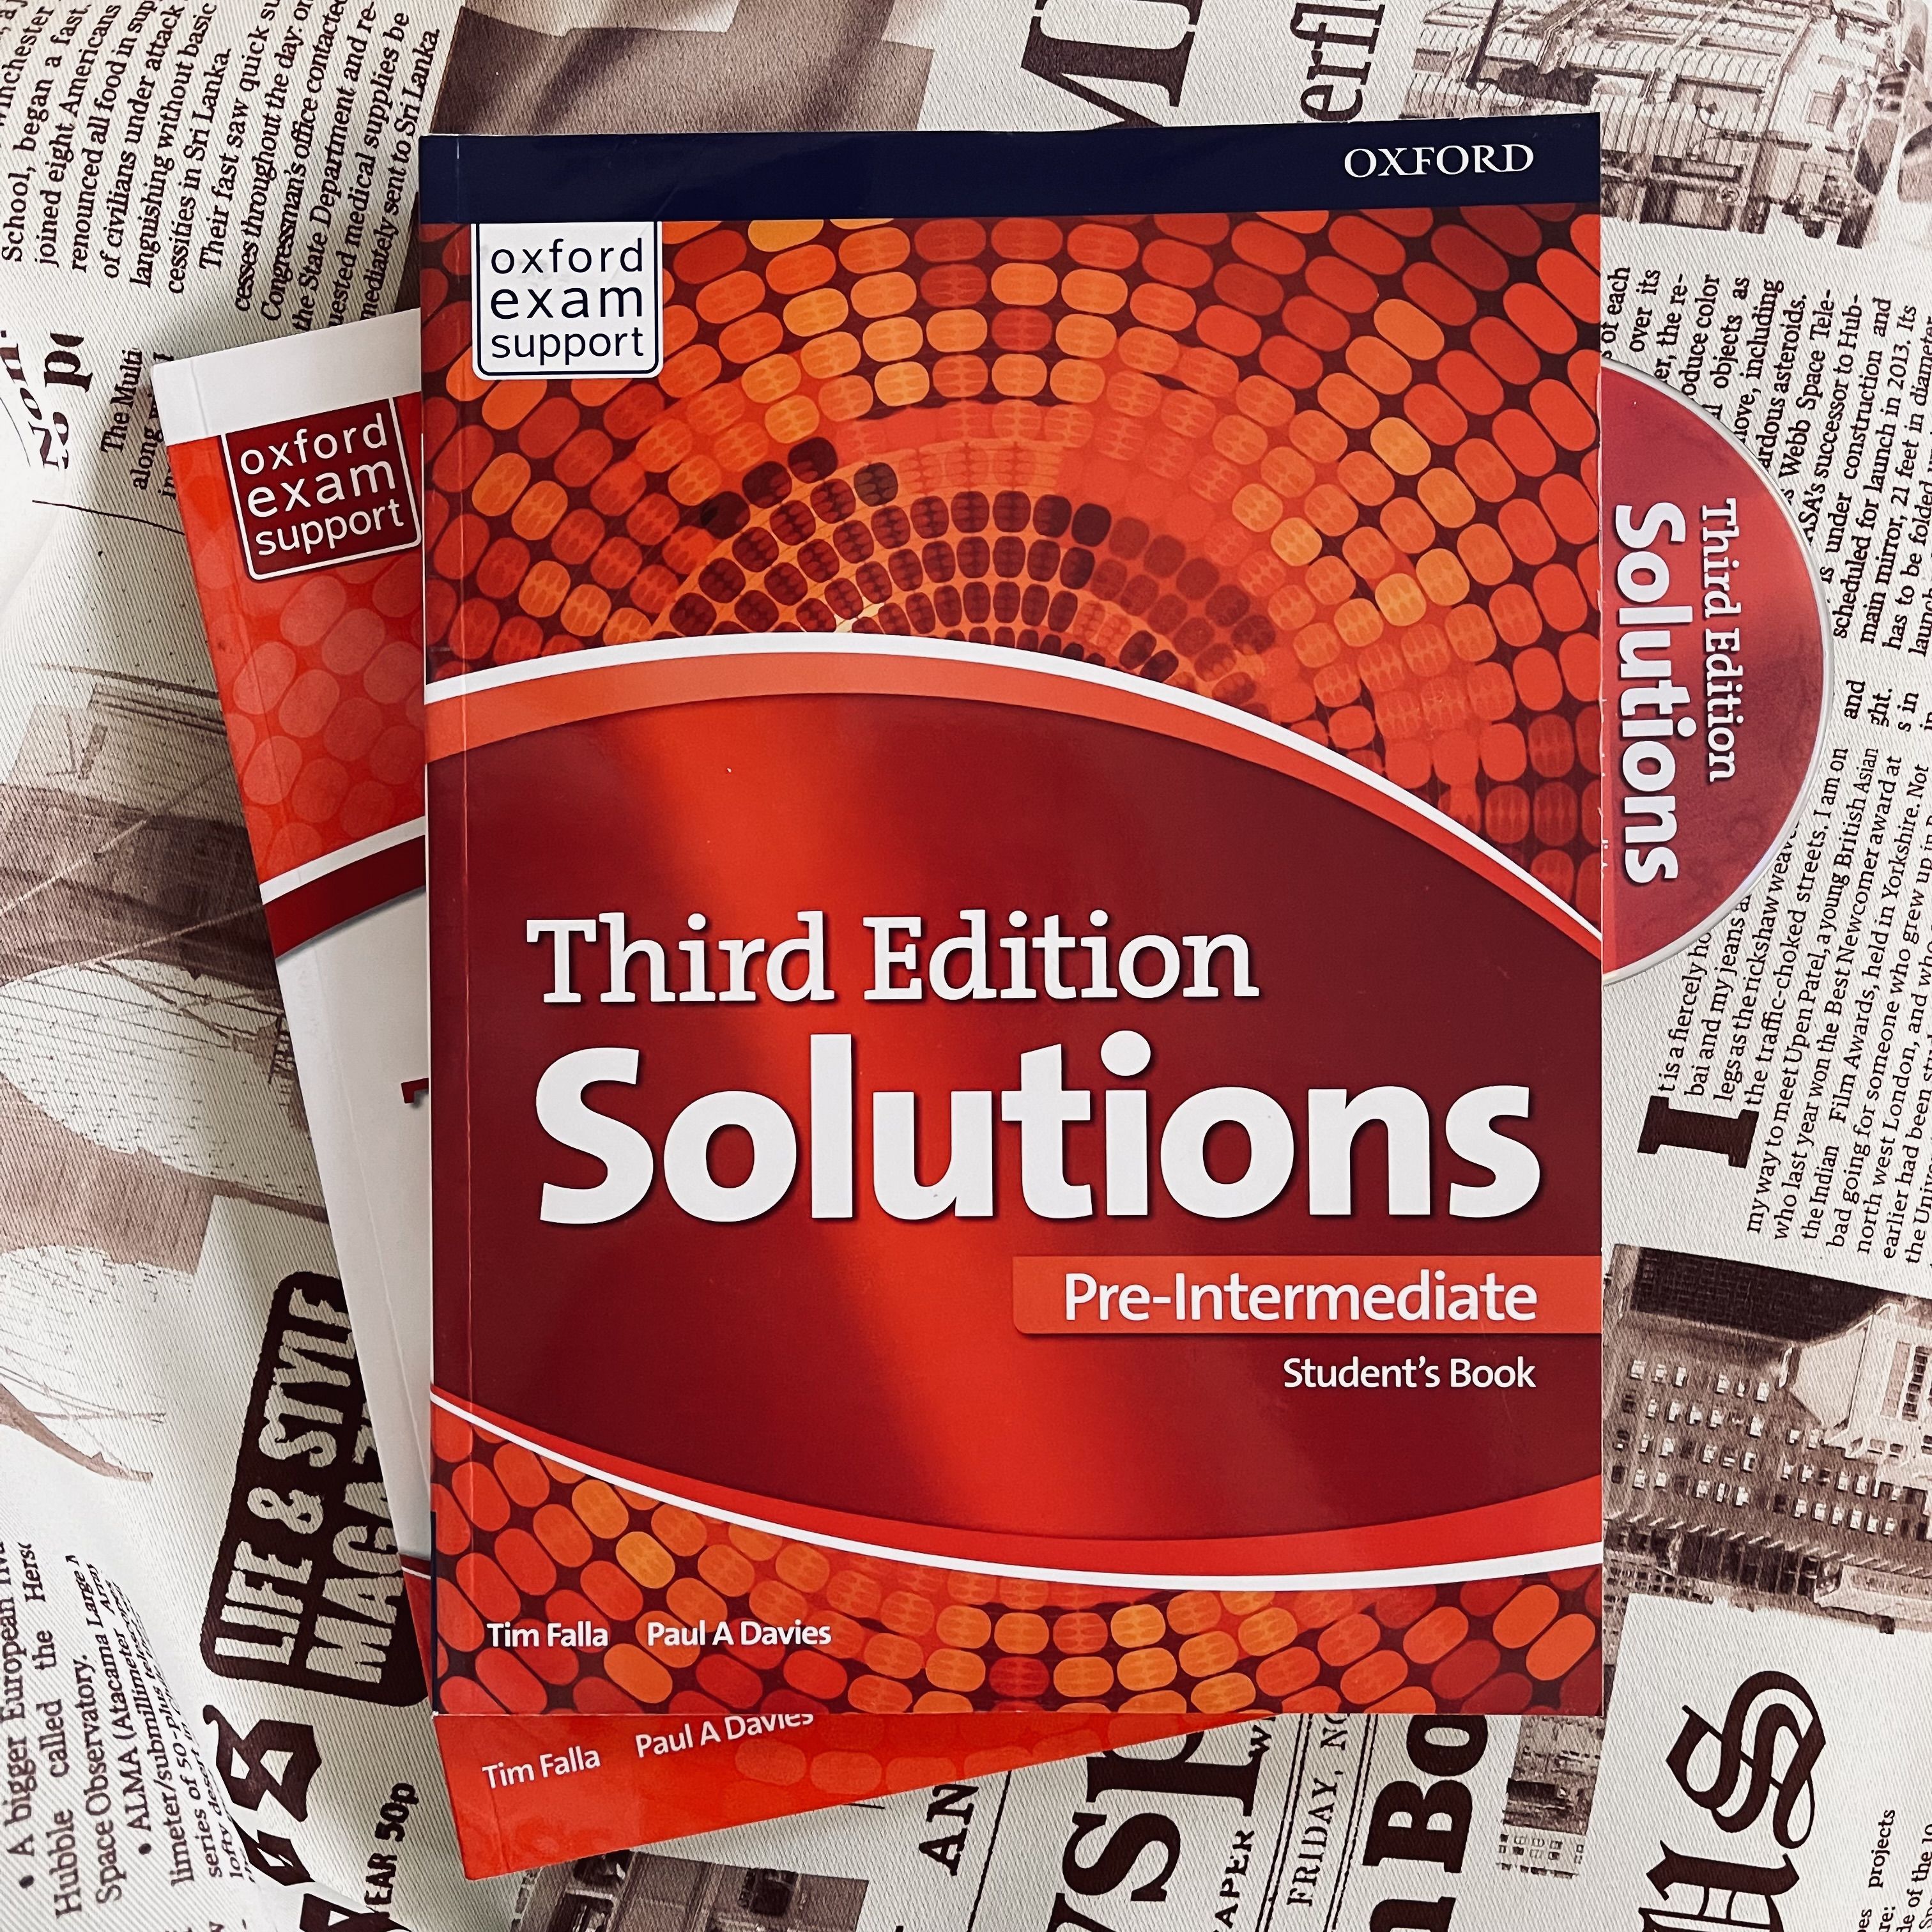 Solution pre intermediate 3rd edition workbook audio. Solutions: pre-Intermediate. Solutions books. Third Edition solutions pre Intermediate Workbook. Third Edition solutions pre Intermediate student's book.